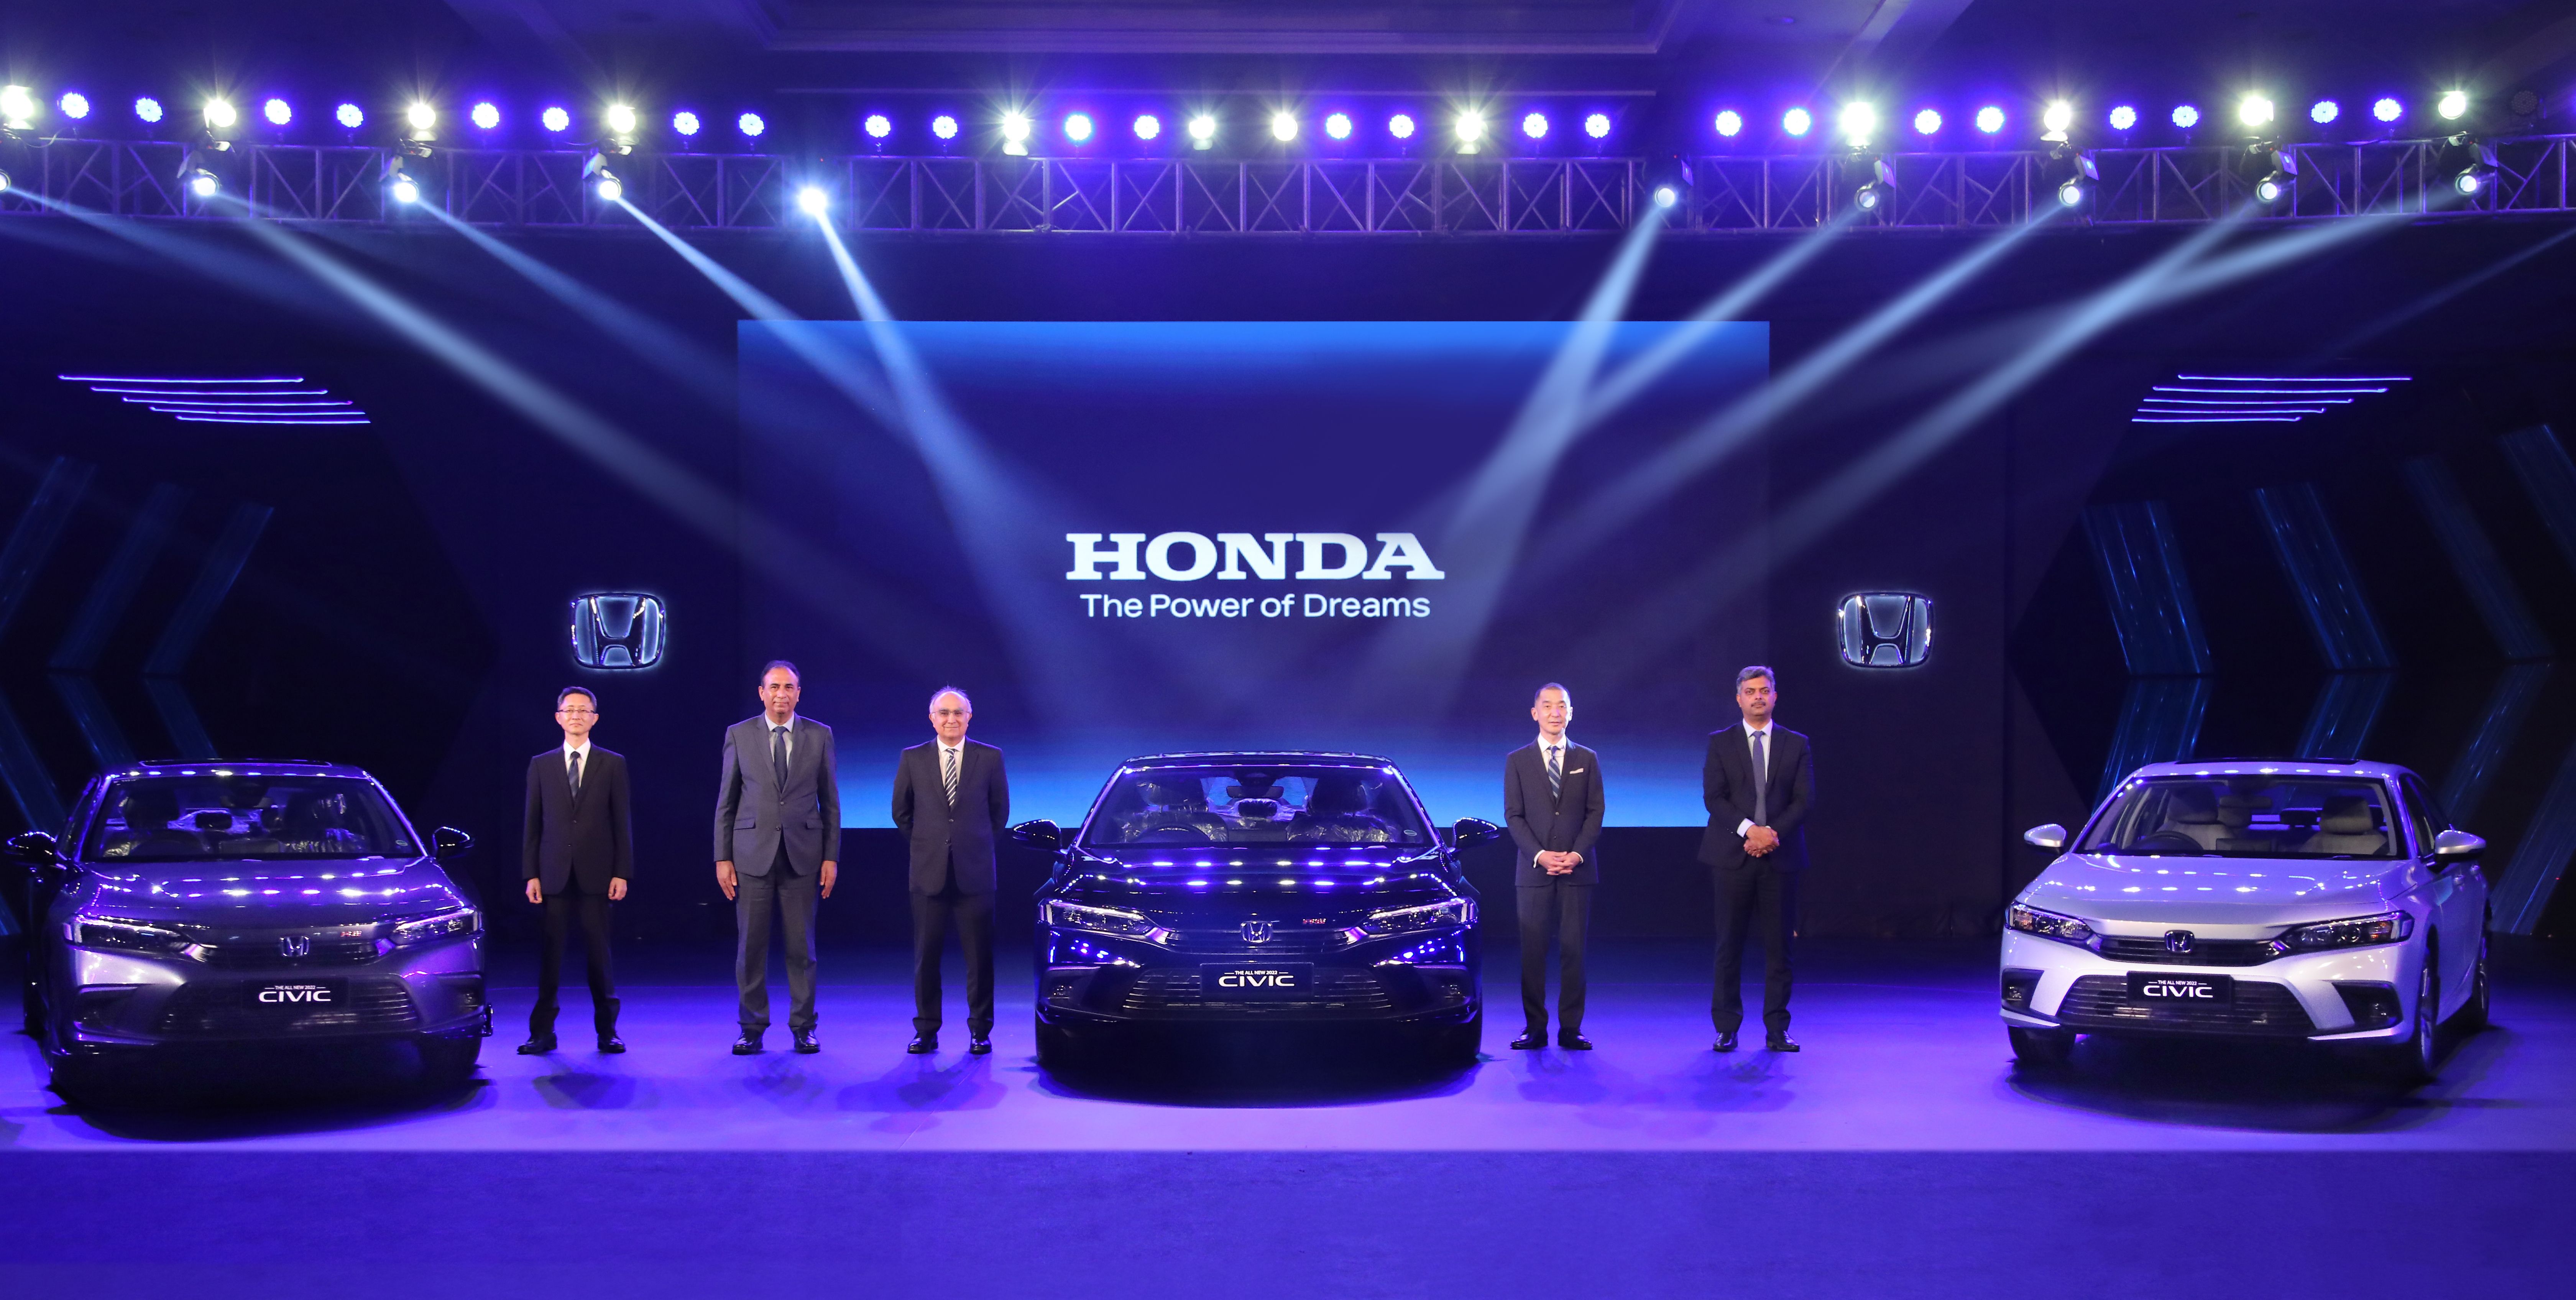 Honda Atlas Cars Pakistan Limited achieves highest ever sales milestone